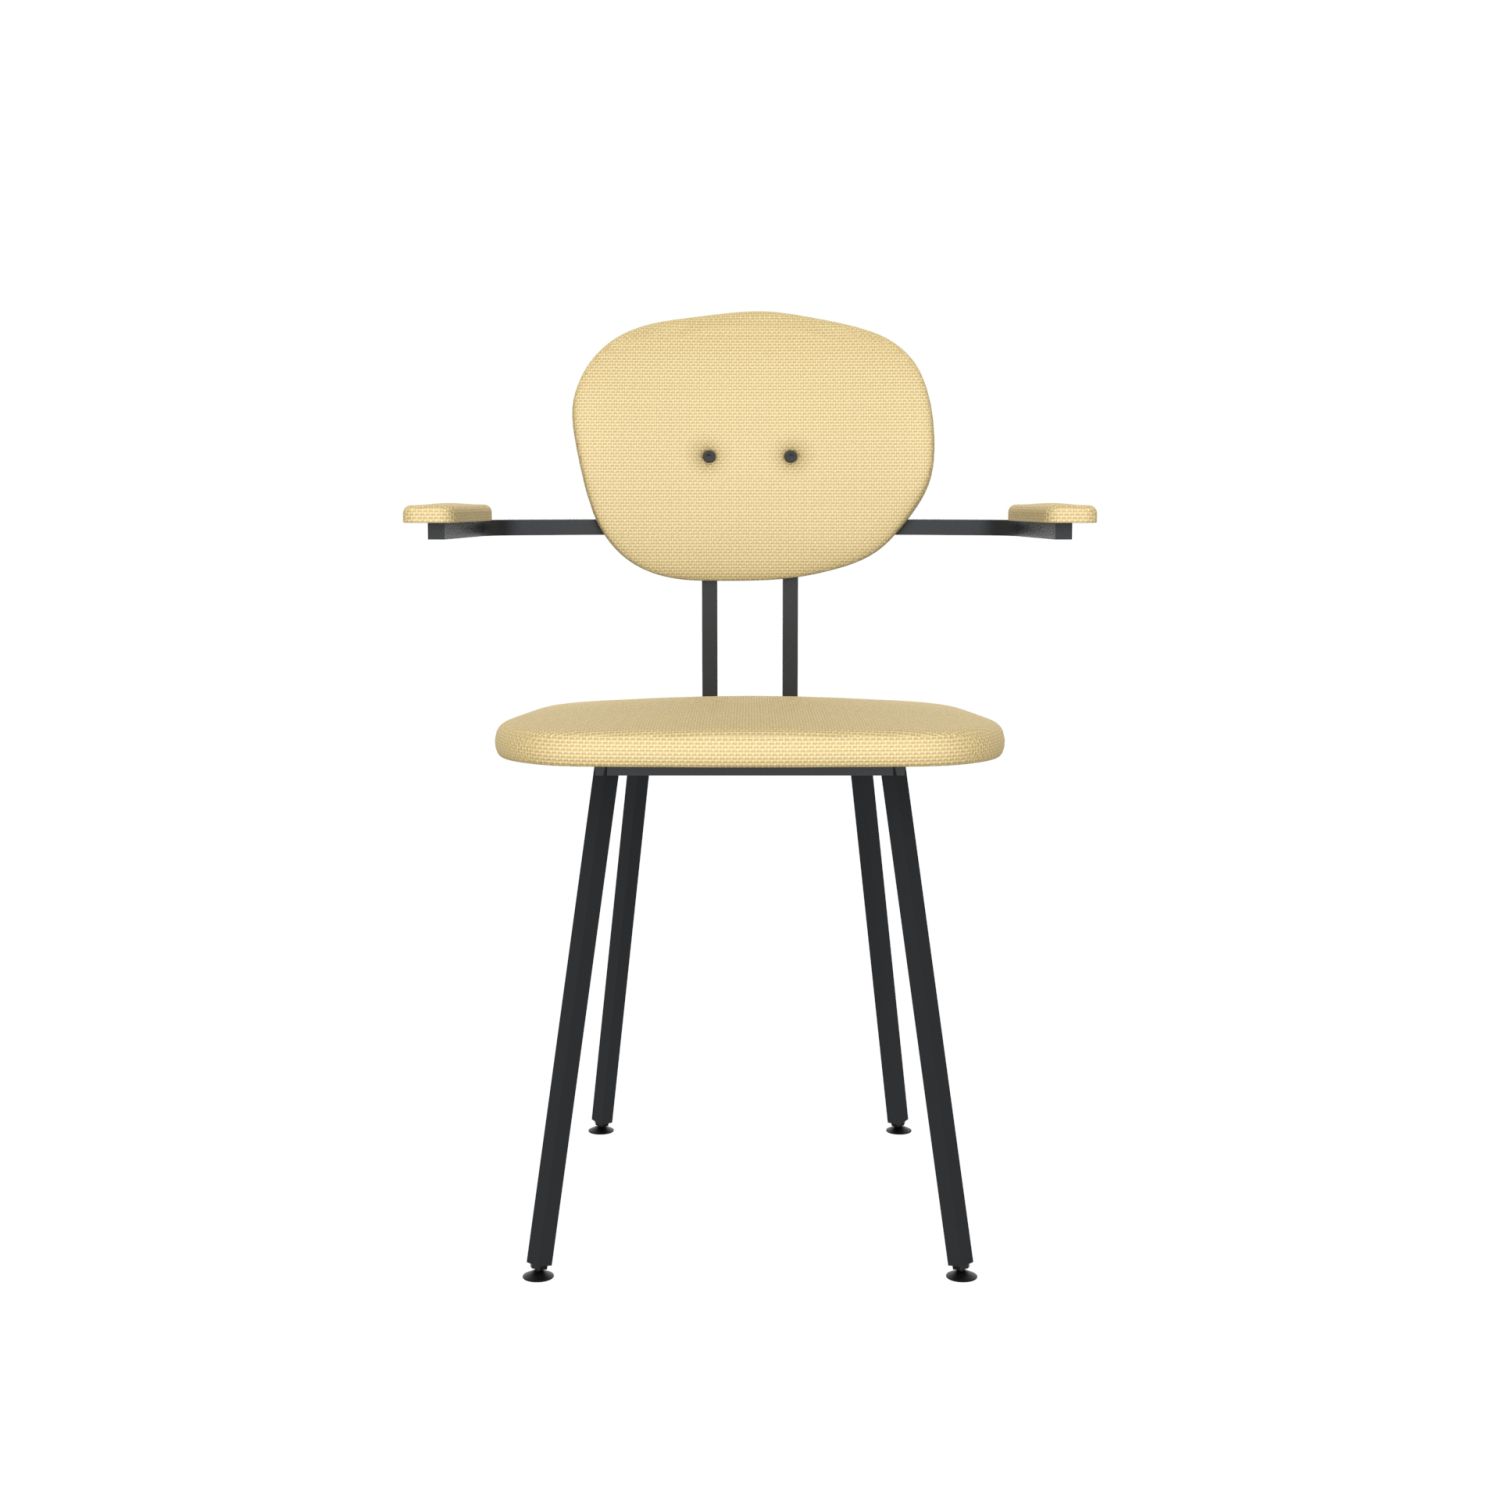 lensvelt maarten baas chair 102 not stackable with armrests backrest a light brown 141 black ral9005 hard leg ends